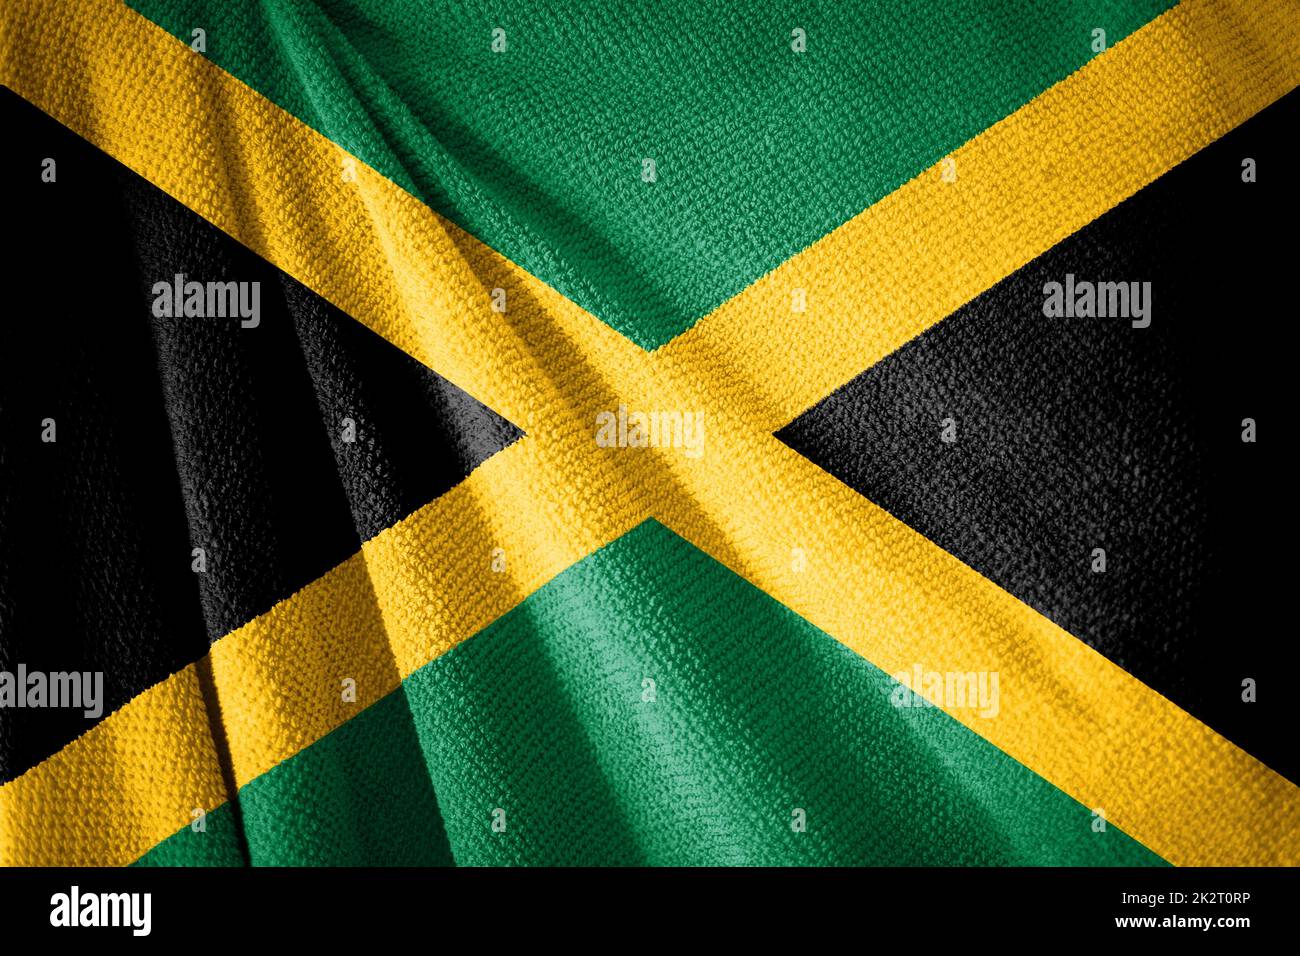 Jamaica flag on towel surface illustration Stock Photo